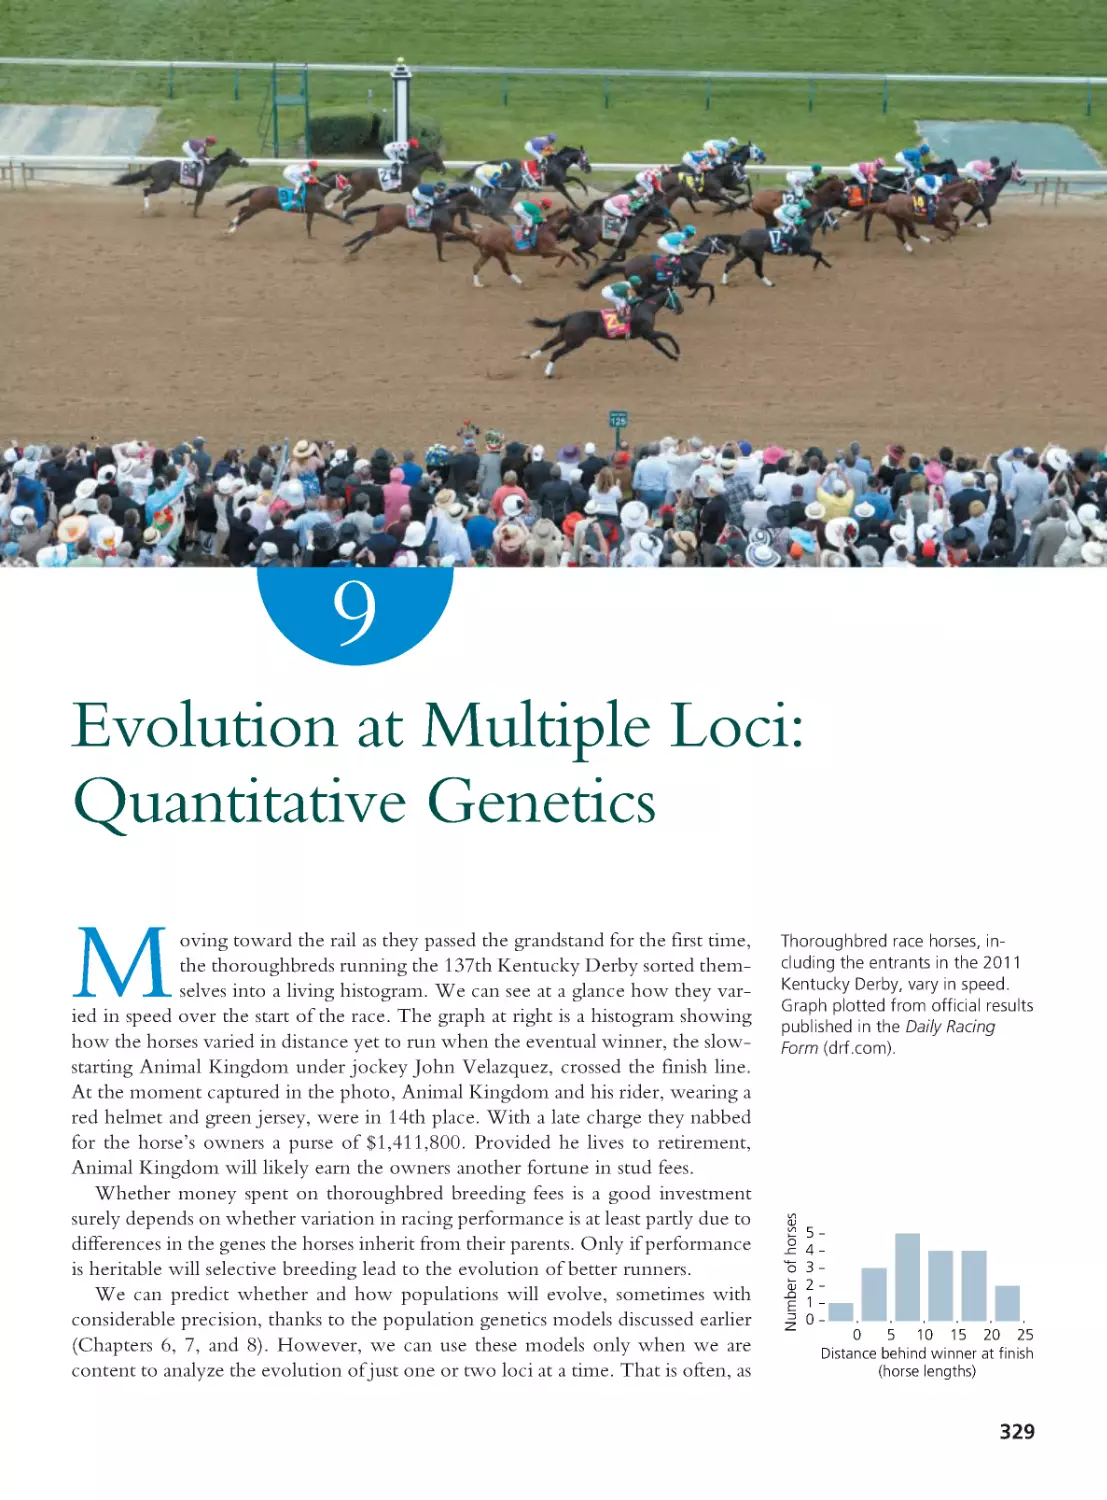 CHAPTER 9 Evolution at Multiple Loci: Quantitative Genetics